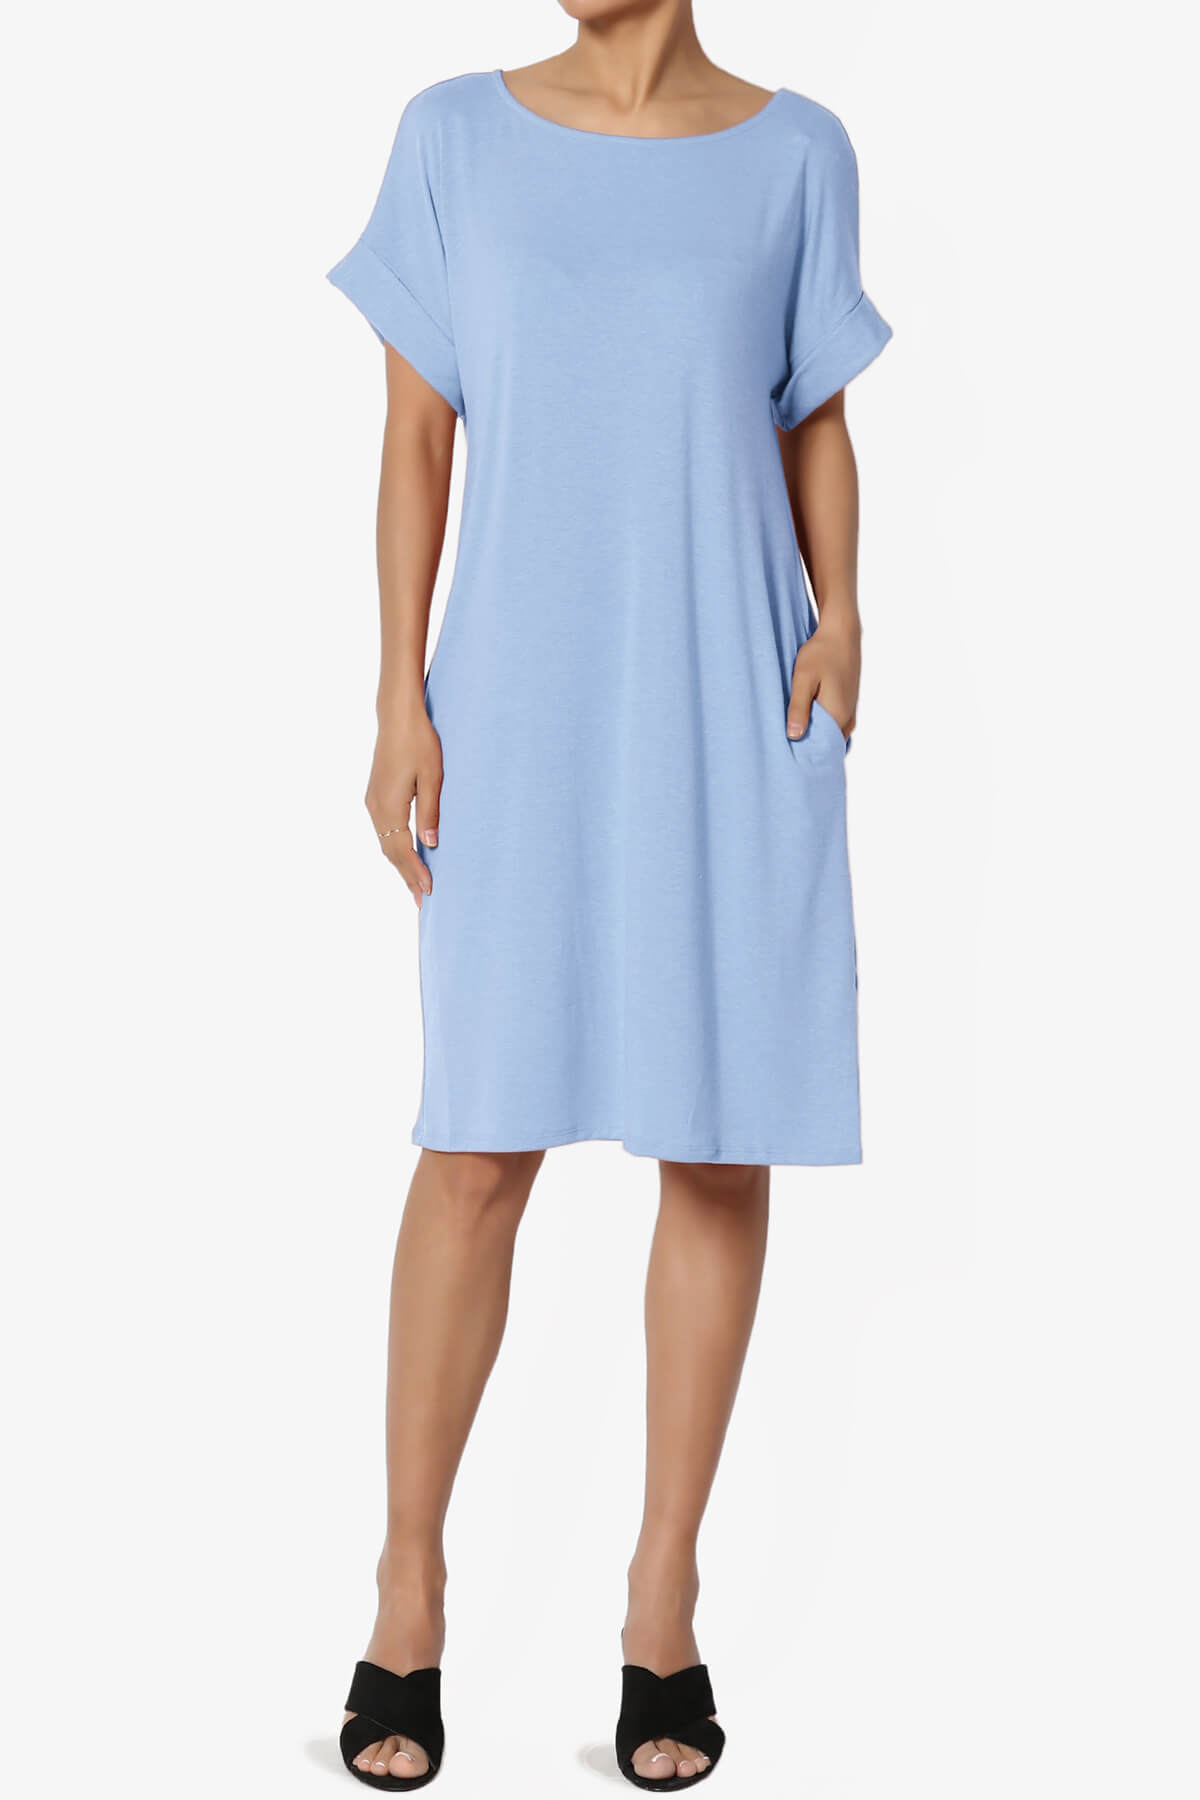 Janie Rolled Short Sleeve Round Neck Dress LIGHT BLUE_1